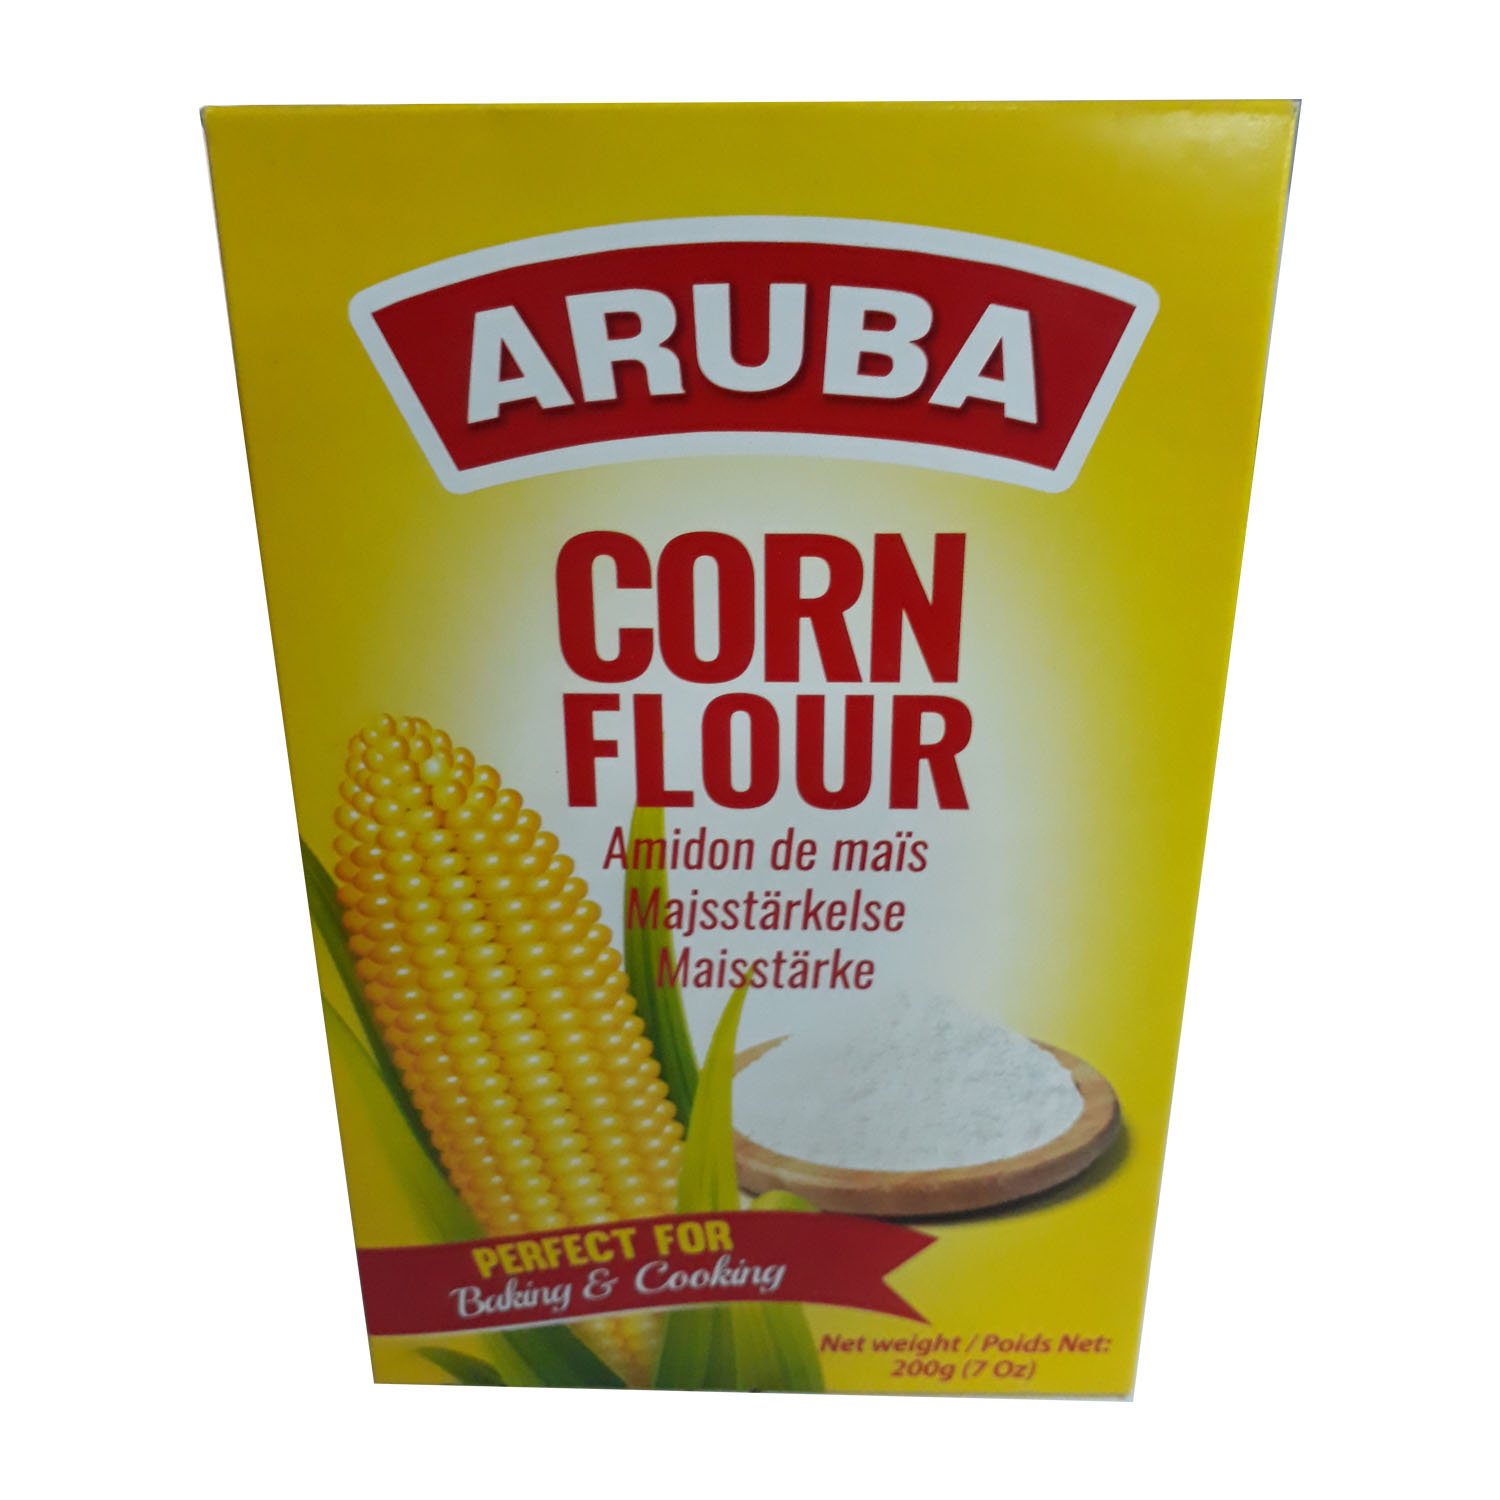 Corn на русском. Corn flour. Suma Corn flour. Упаковка Cornic Corn. Корн КК Юба.